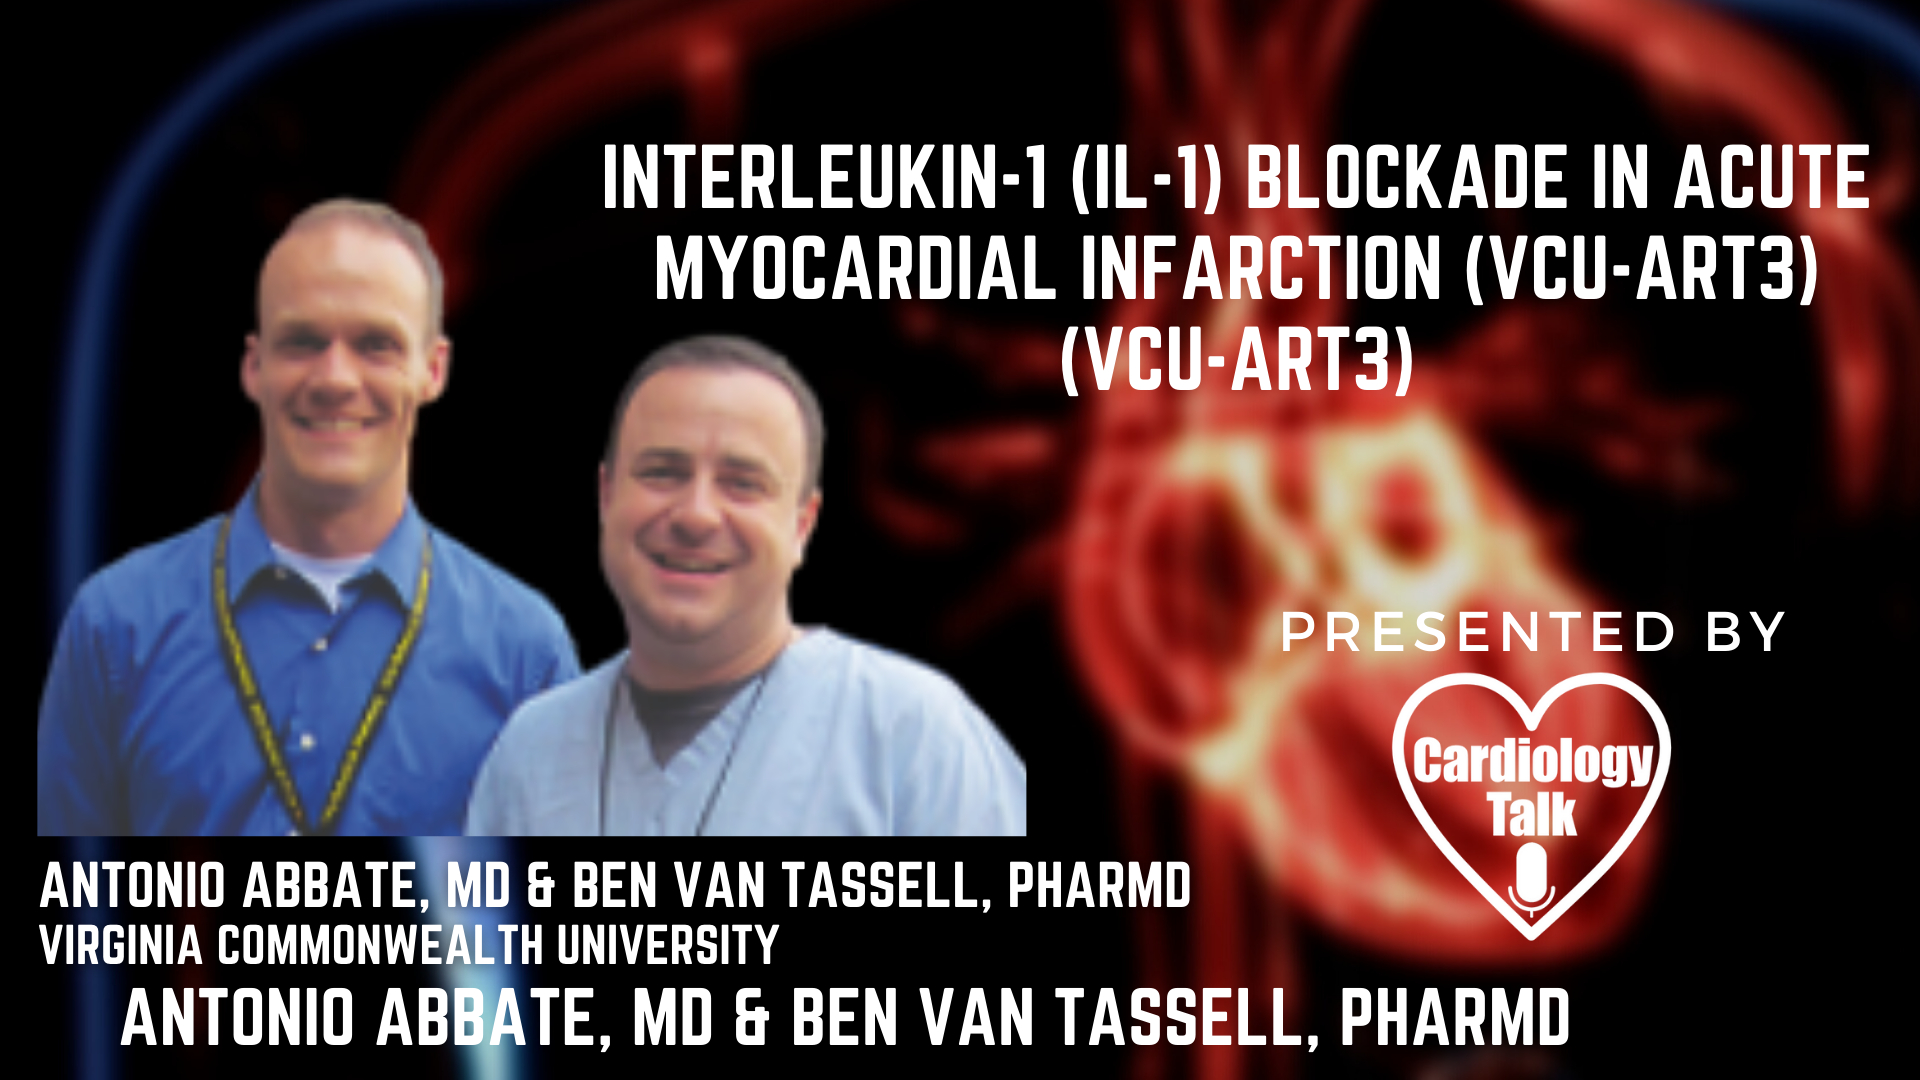 Antonio Abbate, MD & Ben Van Tassell, PharmD - Interleukin-1 (IL-1) Blockade in Acute Myocardial Infarction (VCU-ART3) (VCU-ART3)